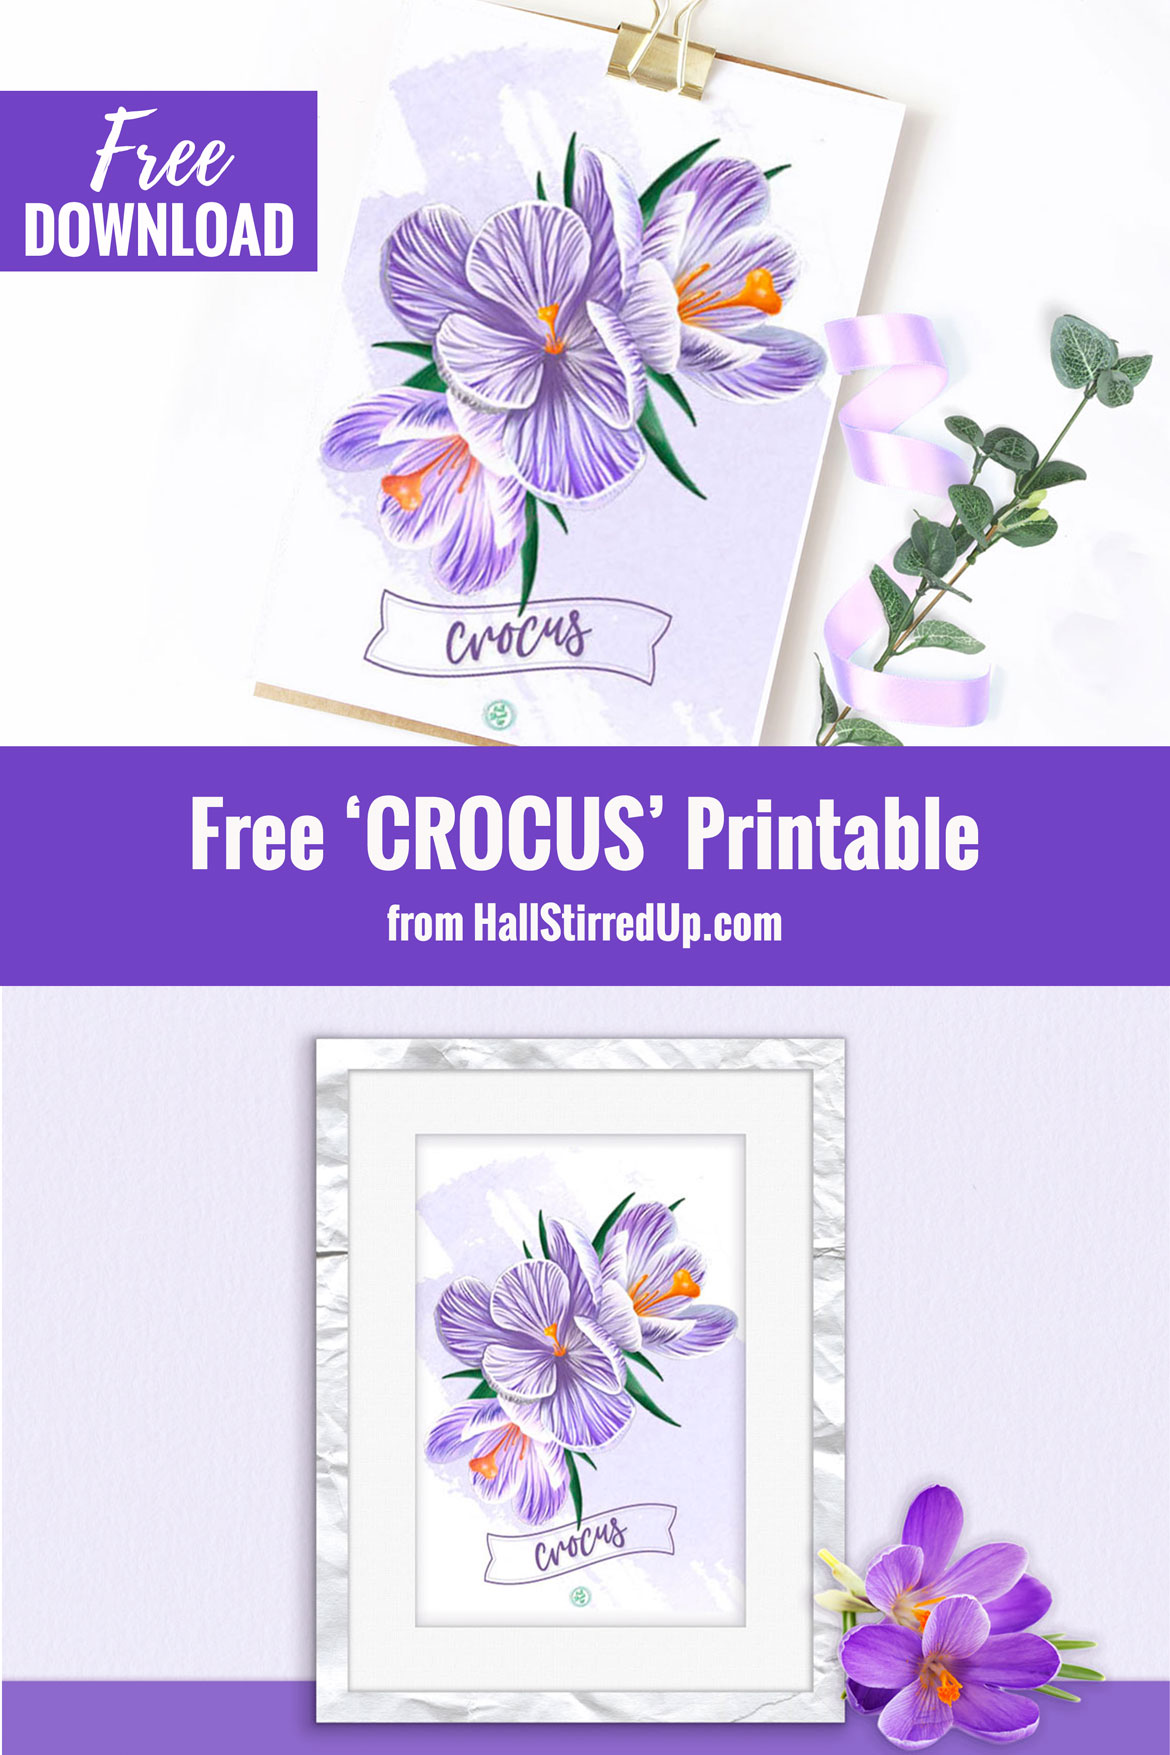 I love Crocus! Includes pretty free printable